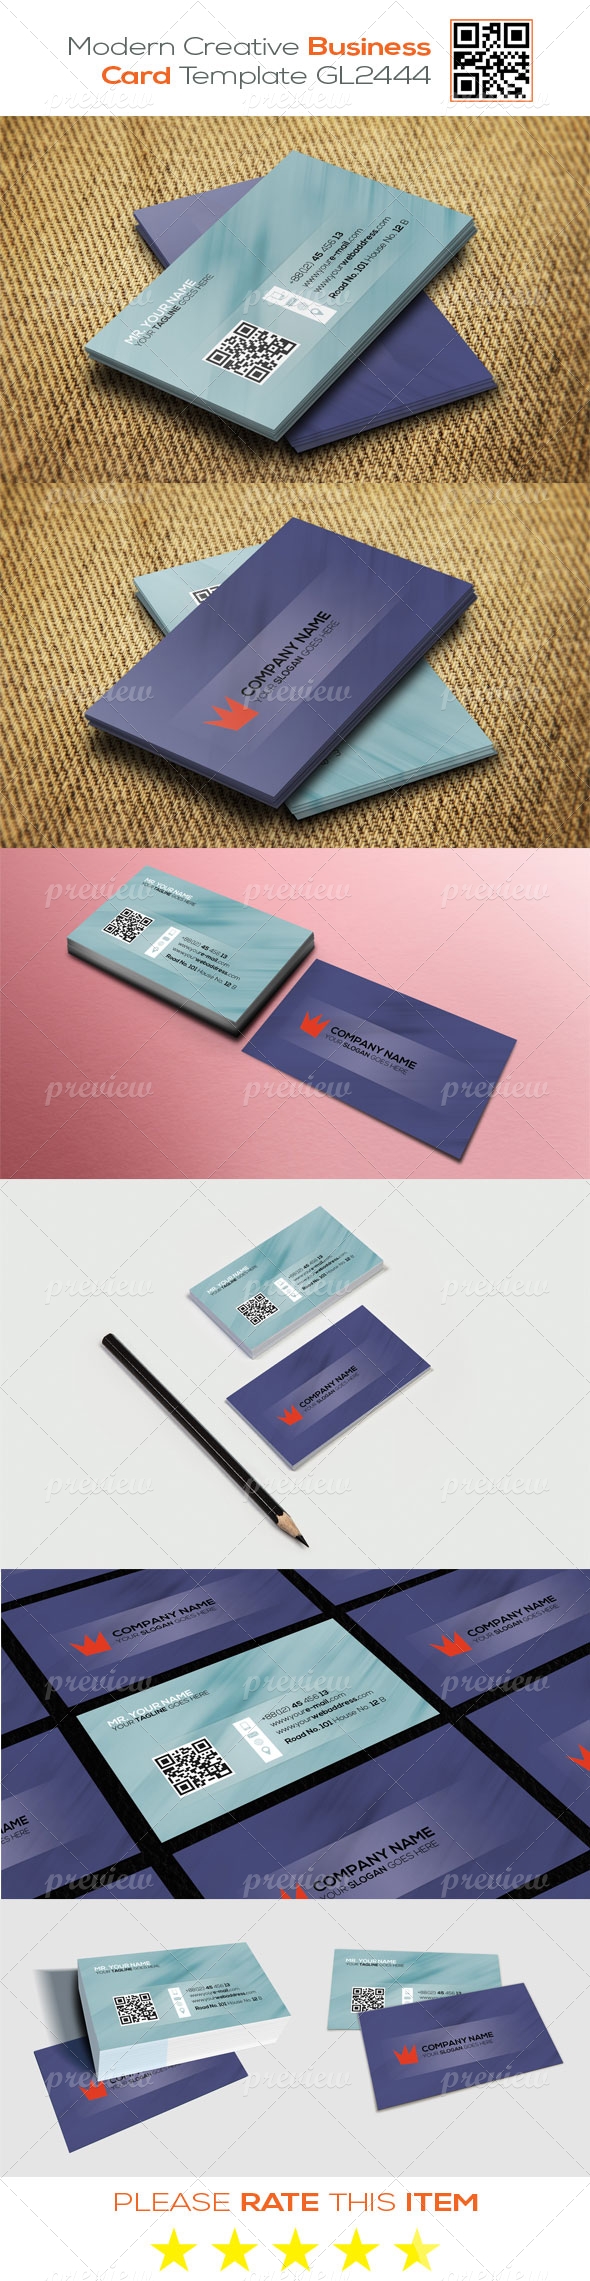 Modern Creative Business Card Template GL2444